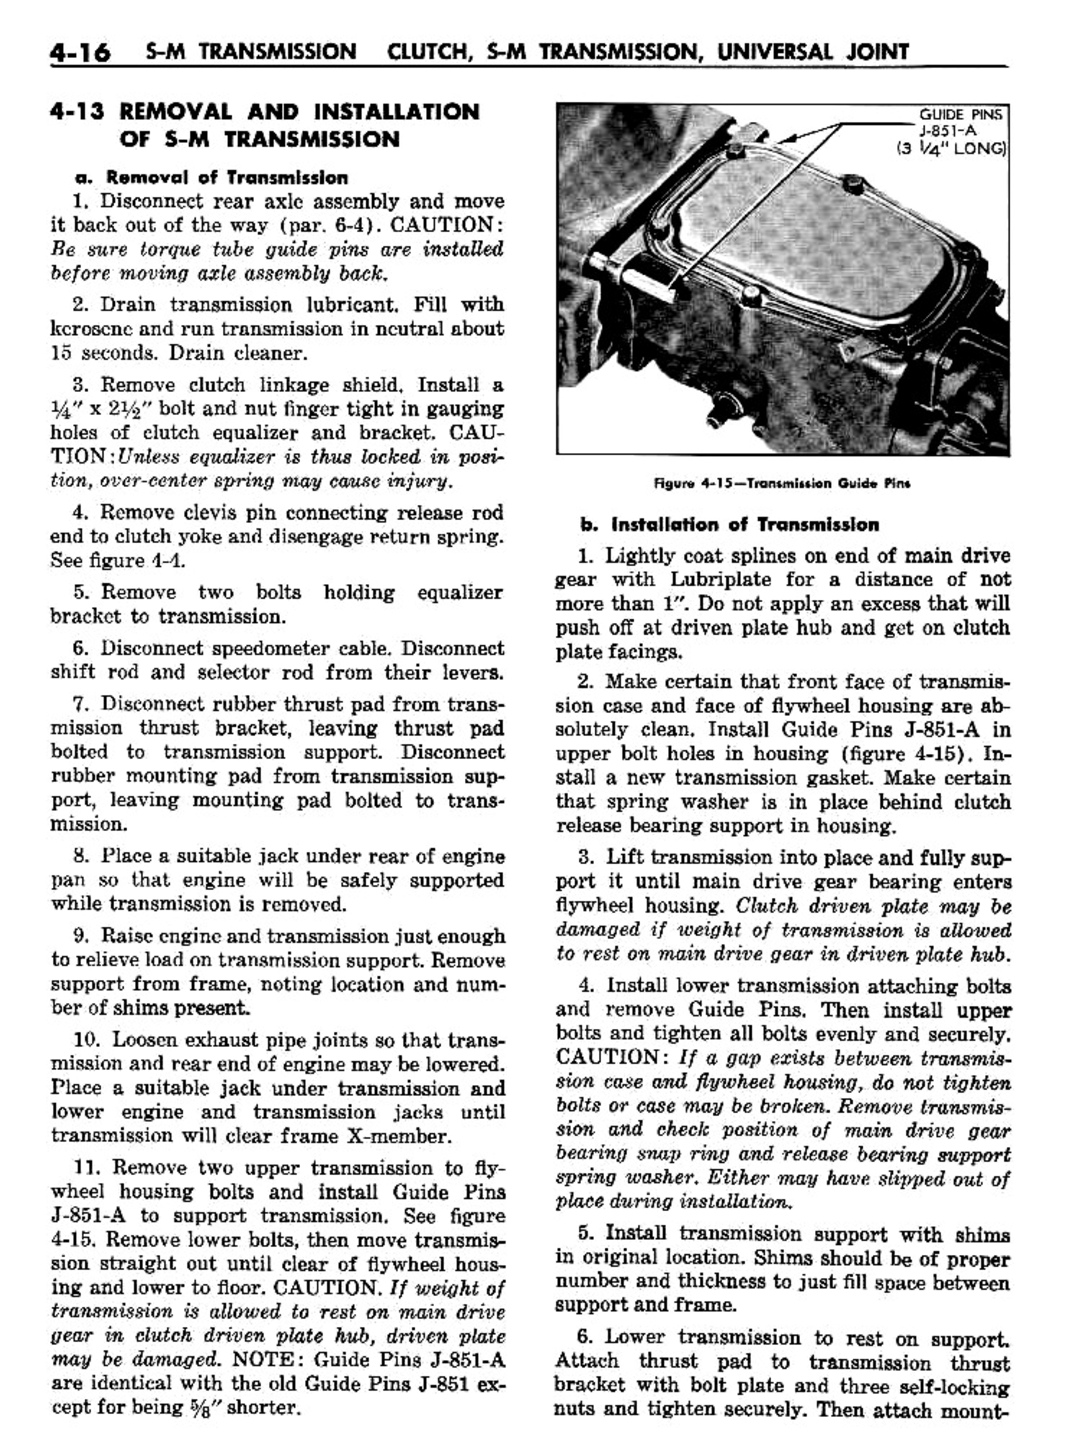 n_05 1957 Buick Shop Manual - Clutch & Trans-016-016.jpg